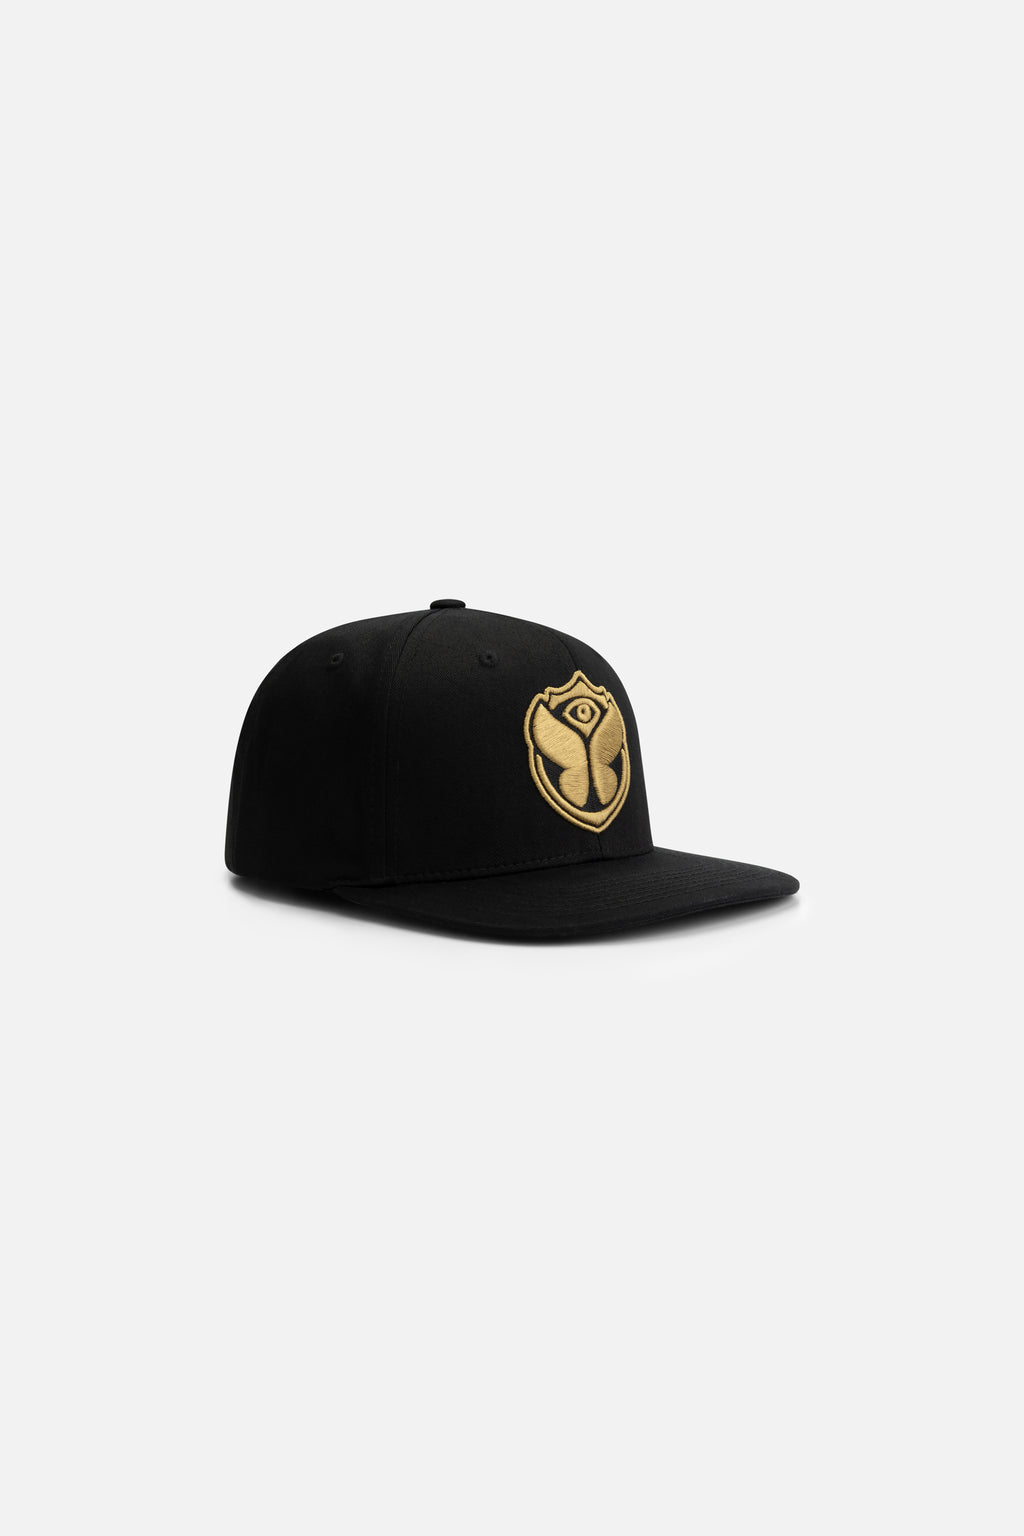 GOLD ICON CAP – Tomorrowland Store